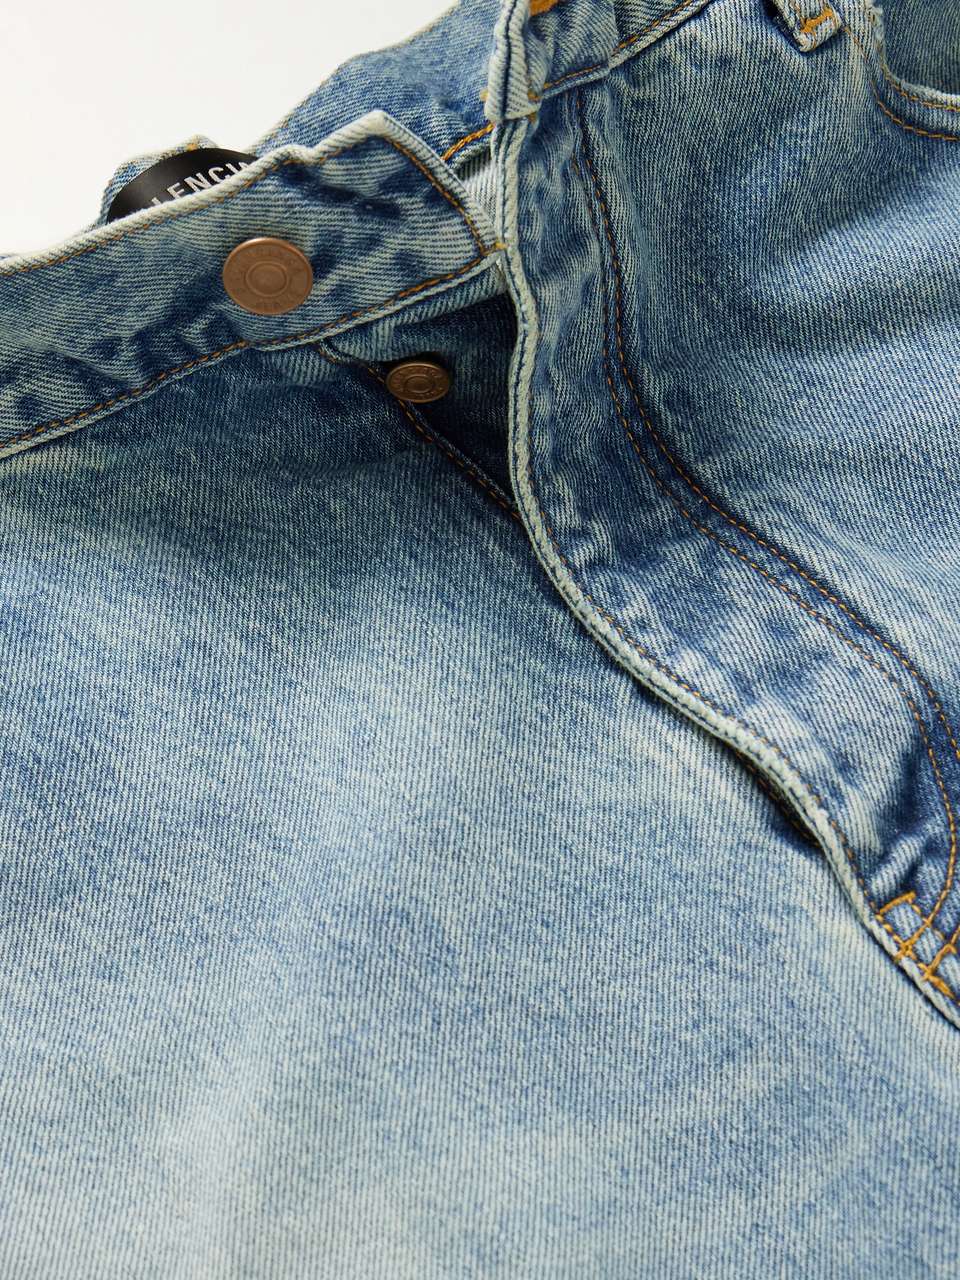 BALENCIAGA Wide-Leg Distressed Jeans for Men | MR PORTER